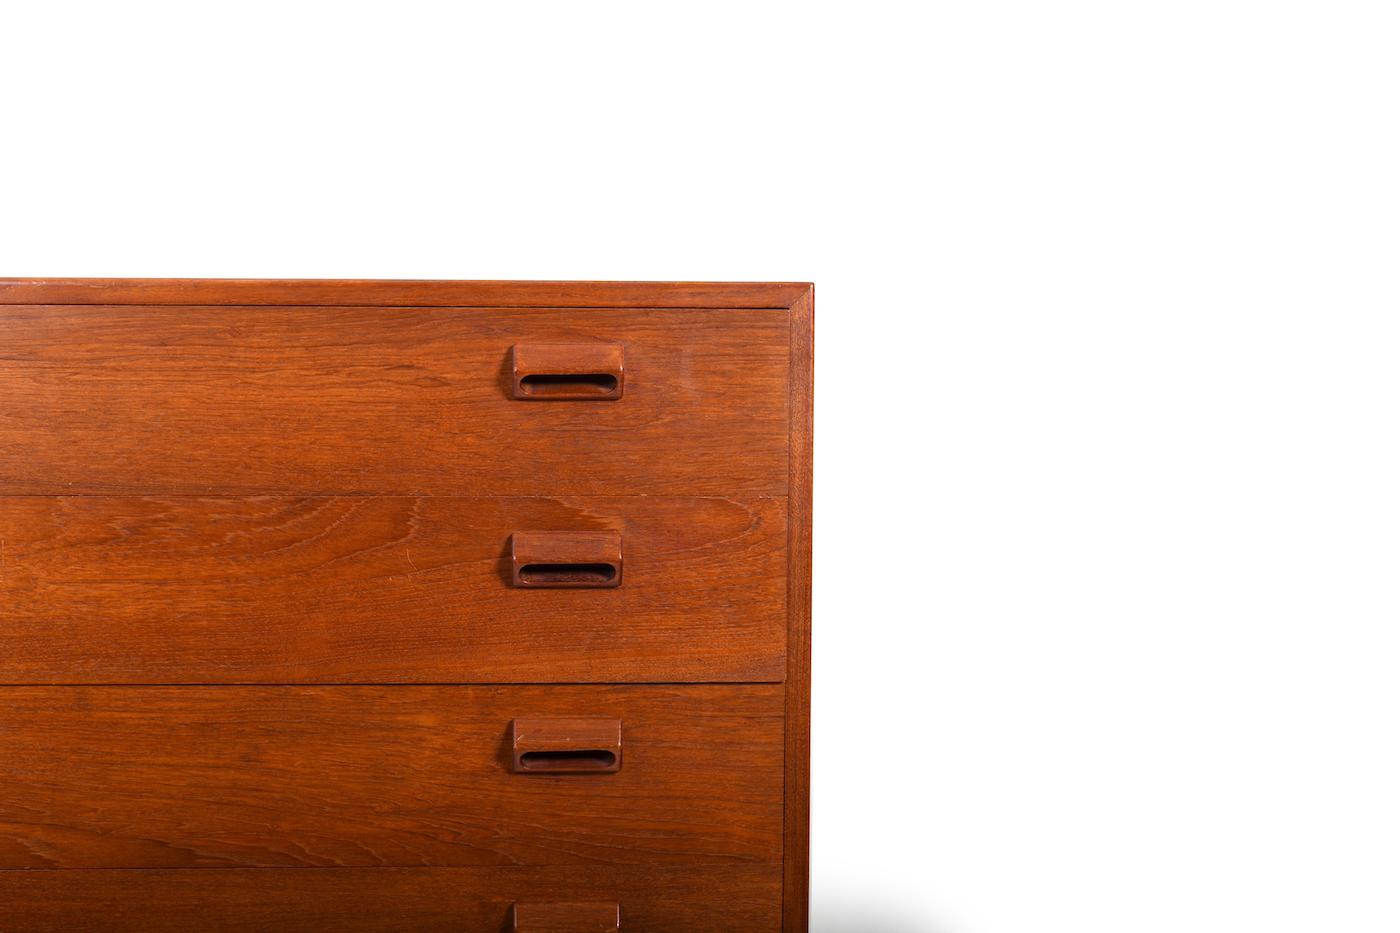 Large chest of drawers in teak by Børge Mogensen for Søborg Møbler 1950s. Base in solid oak. 7 drawers. Rarely offered model.
Measures : H. 145 cm / W. 100 cm / D. 46 cm.